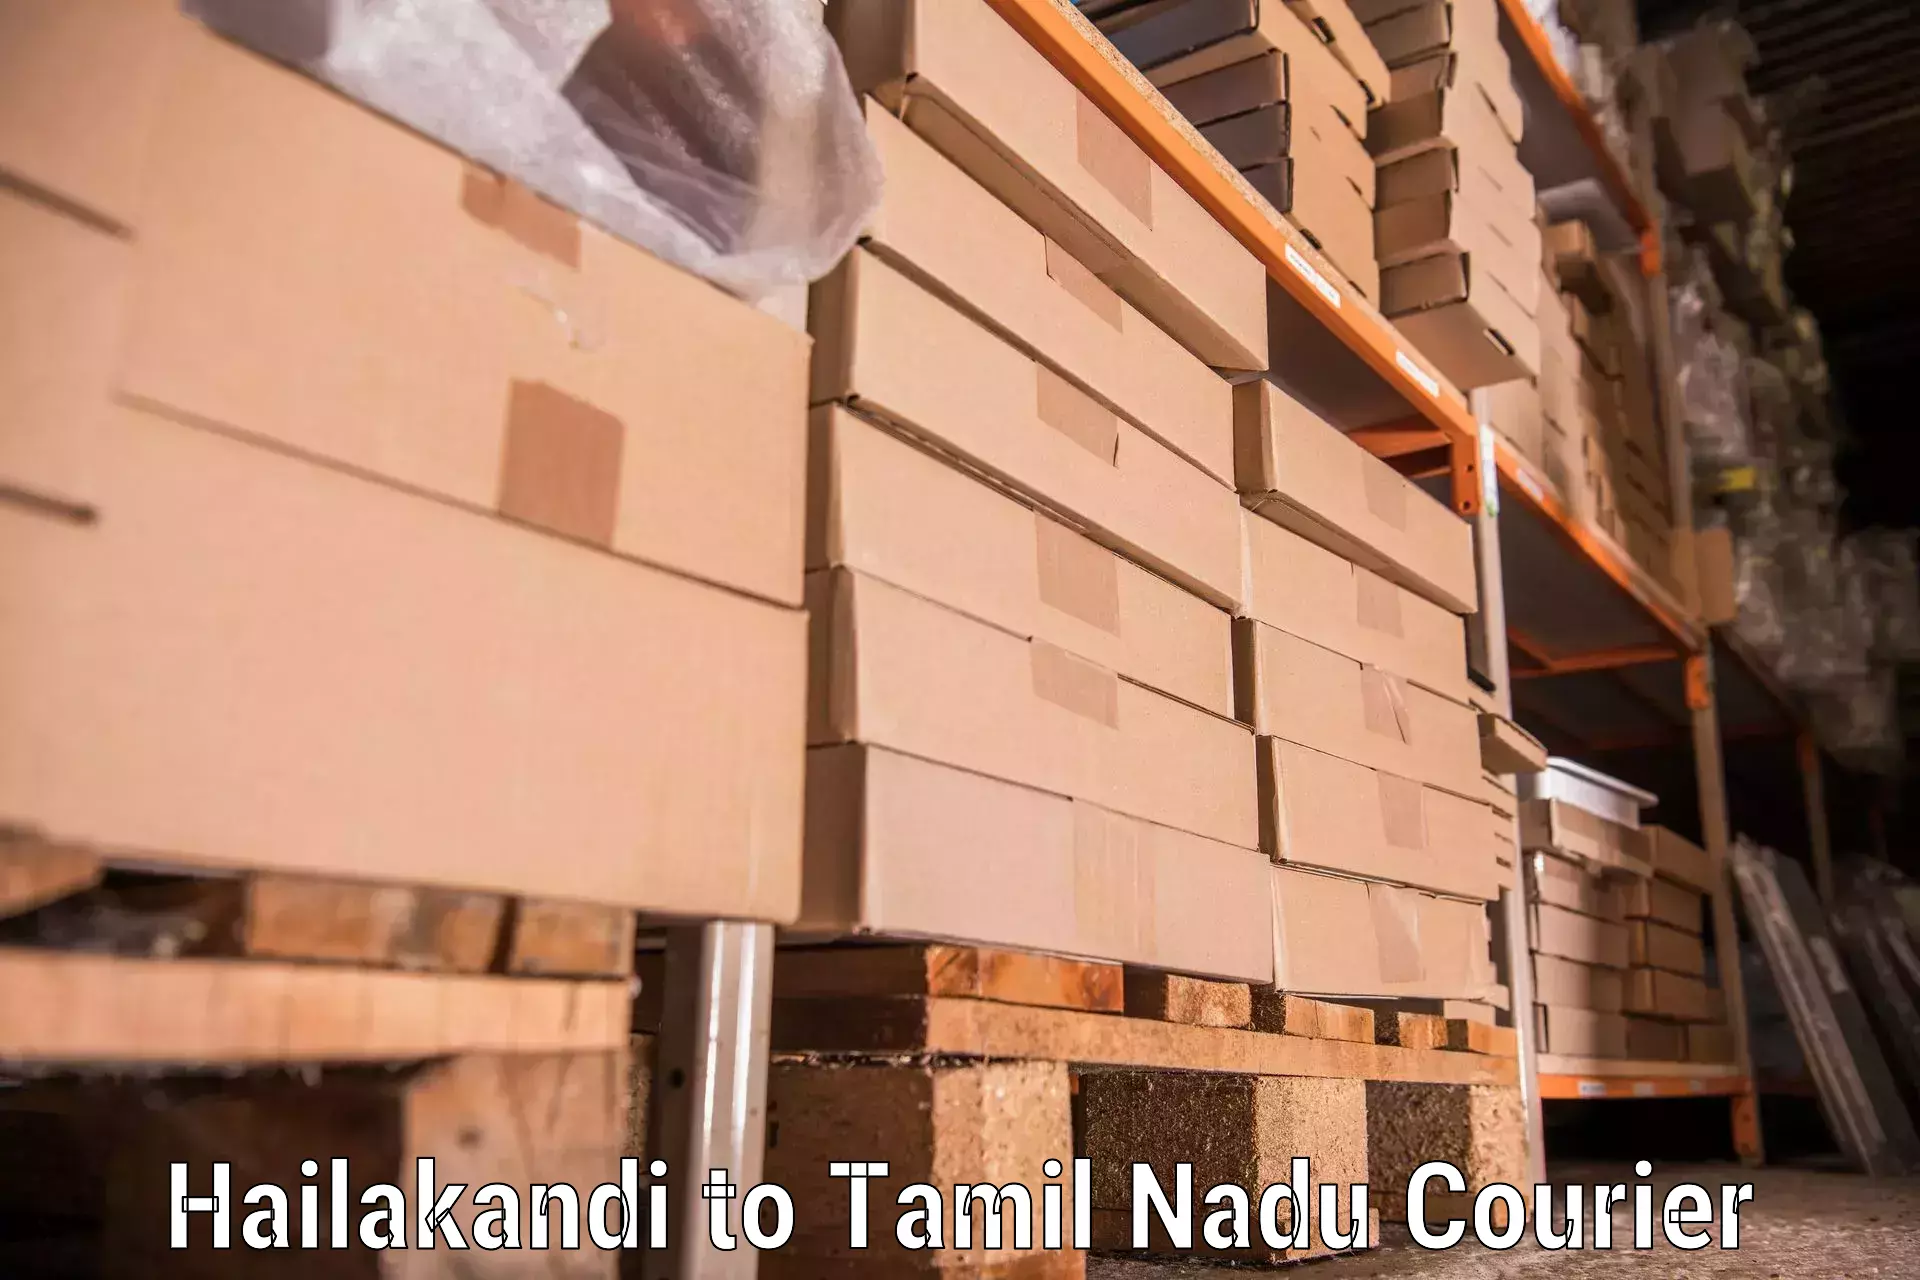 Quality moving and storage Hailakandi to Dindigul